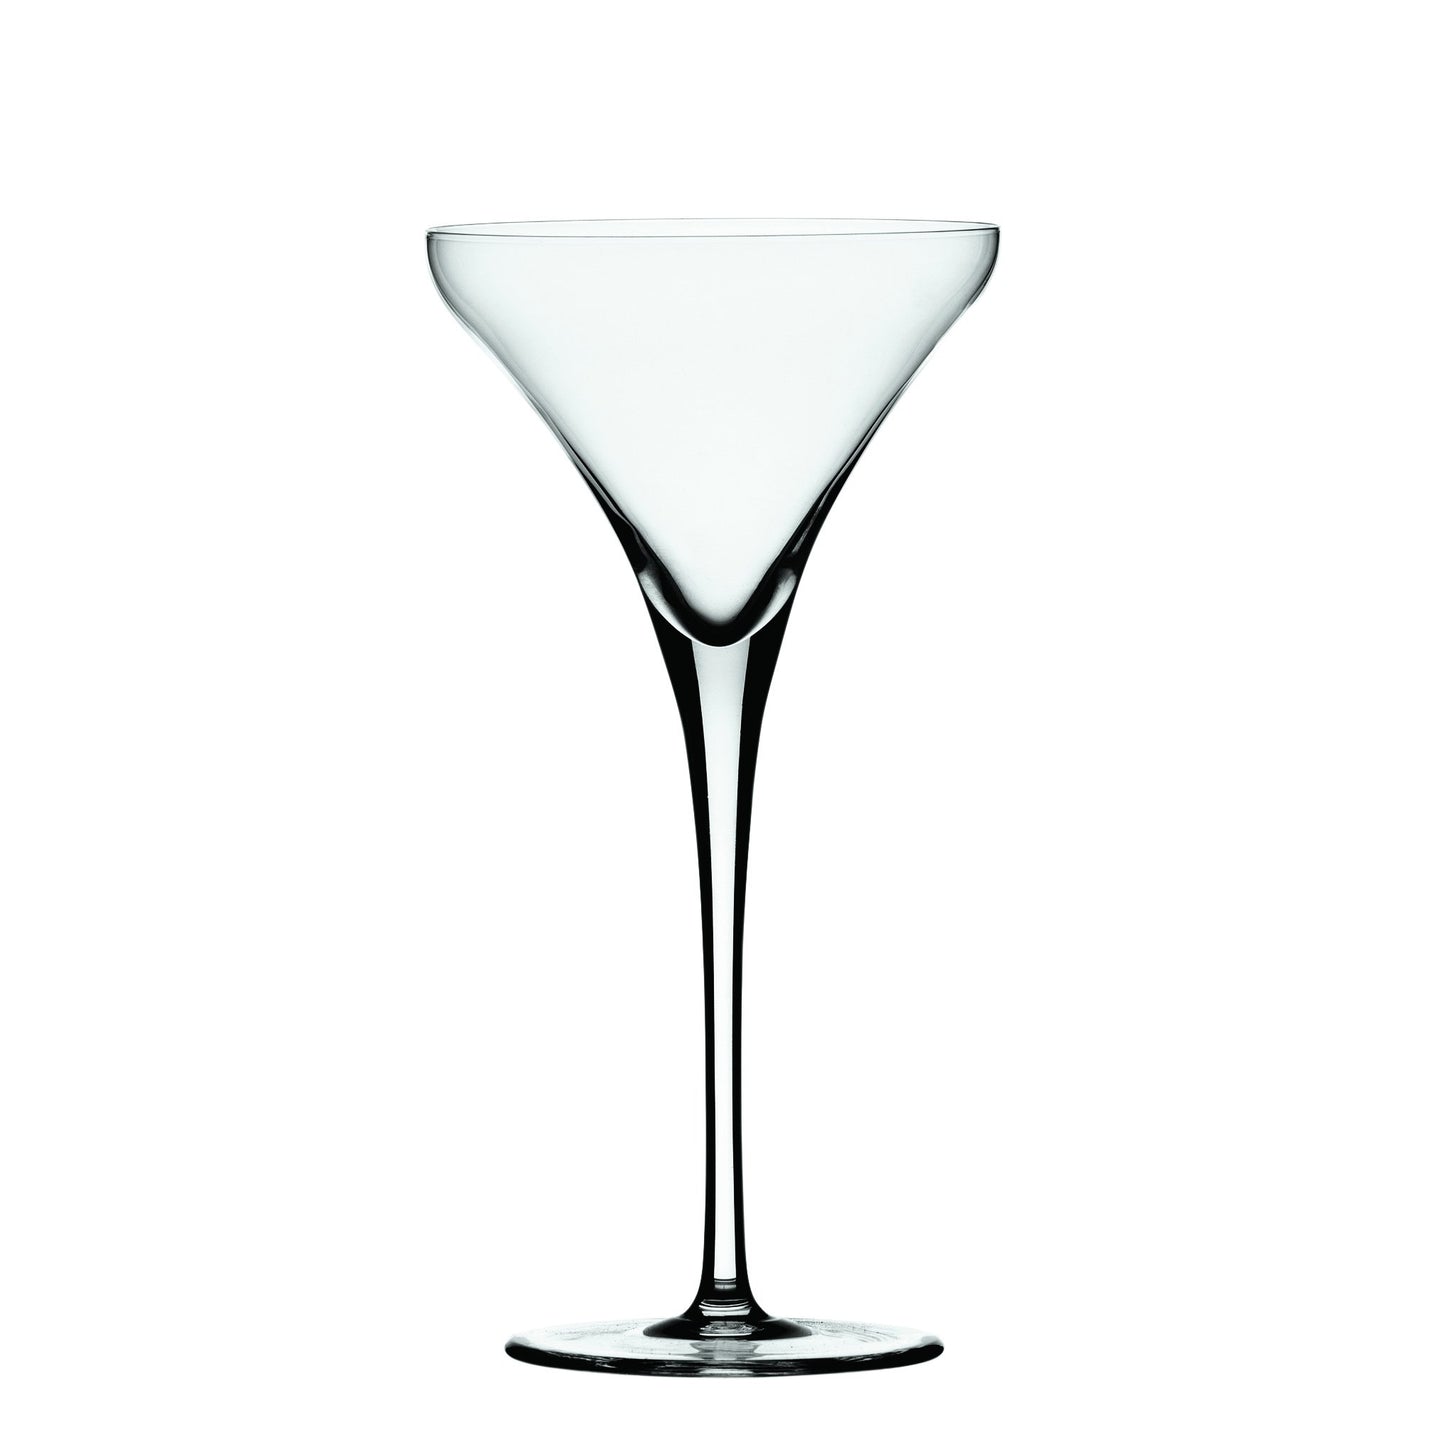 Spiegelau Willsberger 9.2 oz Martini glass - set of 4-Drinkware-TrueBrands-VinGrotto Wine Cellar Construction Company